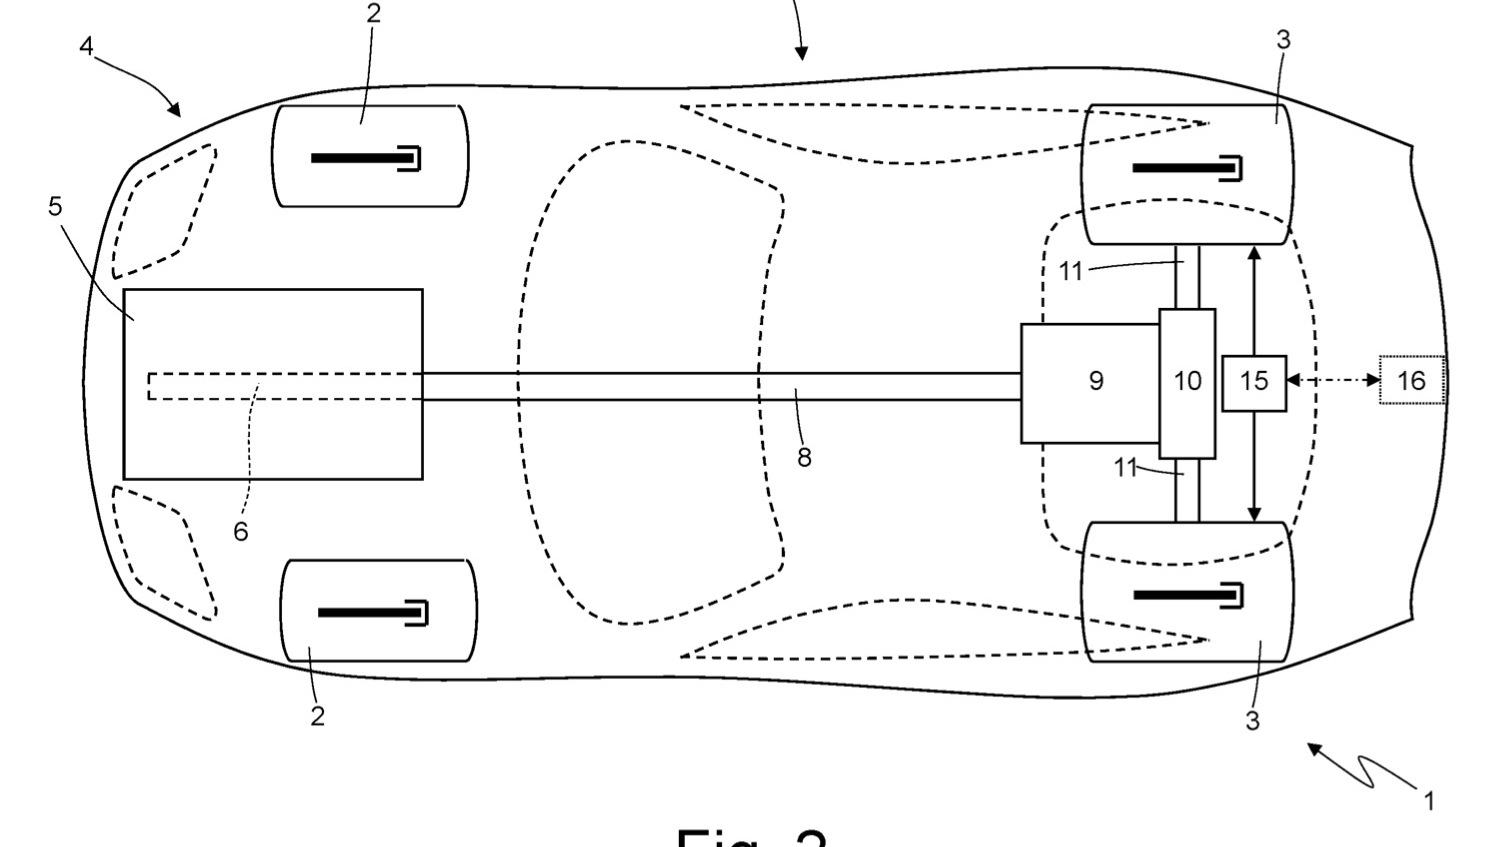 Ferrari rear-wheel steering system patent image